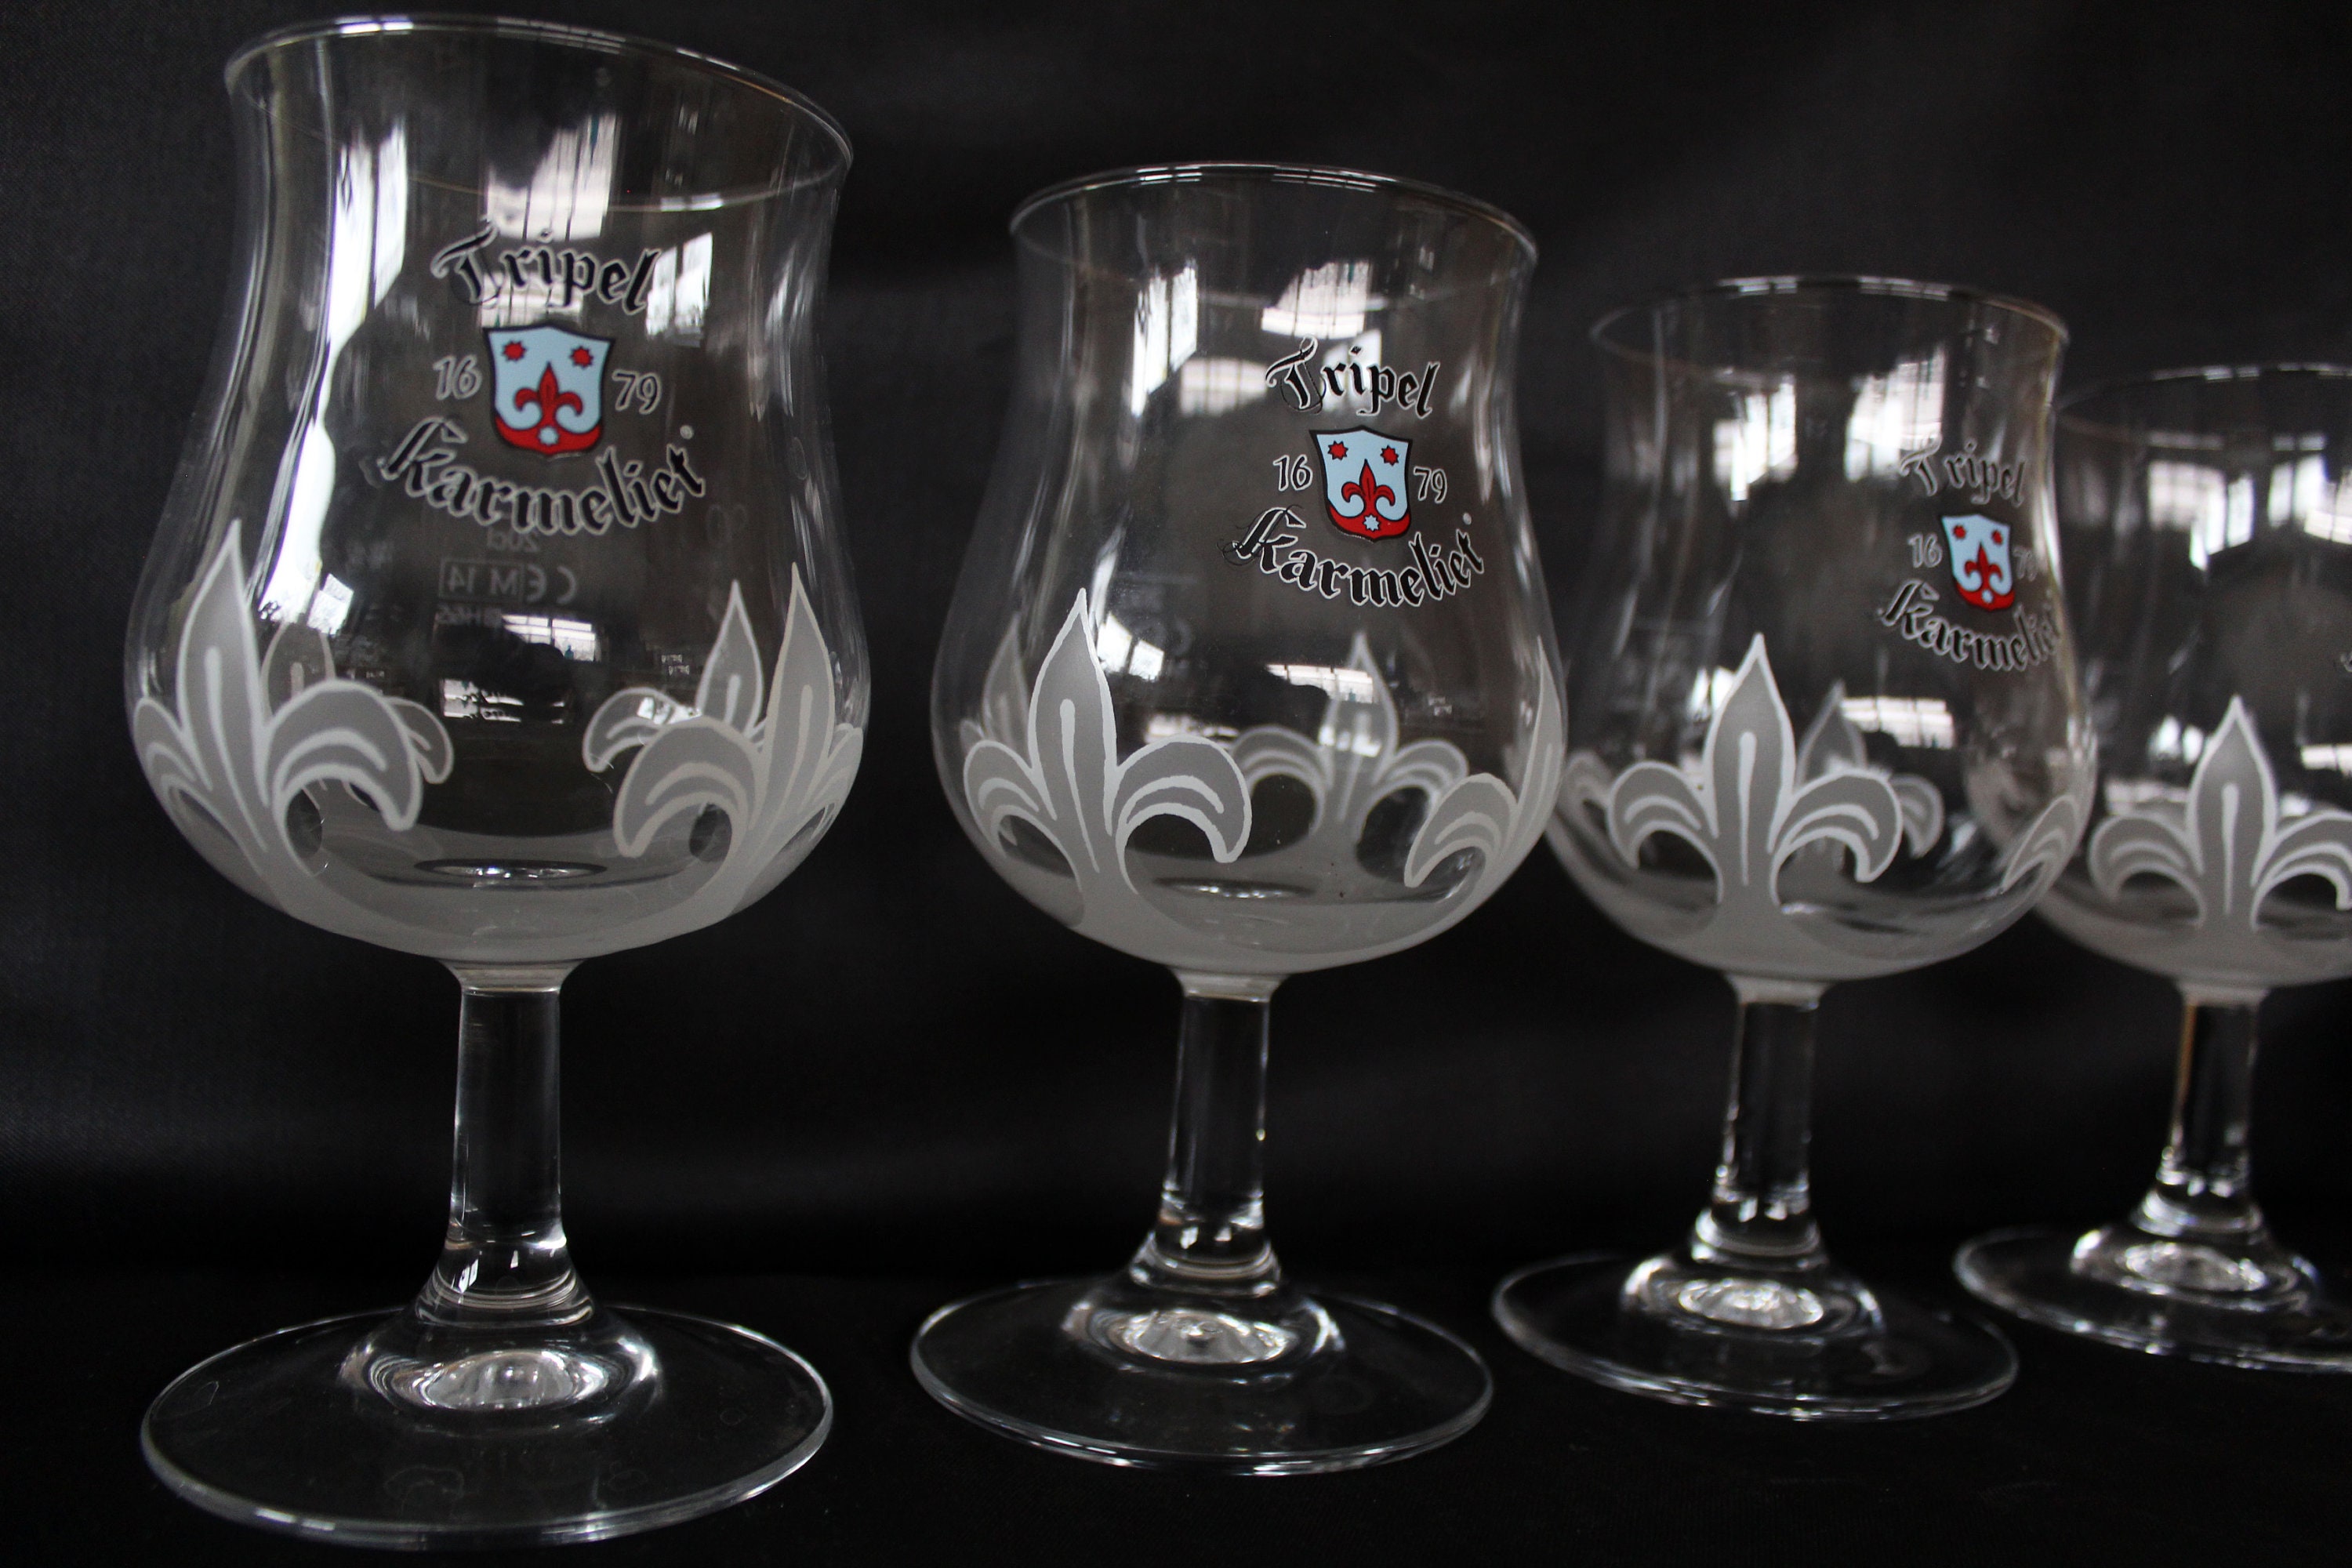 6 Vintage Belgium Beer glass Tripel Karmeliet fleur de lys - Etsy.de